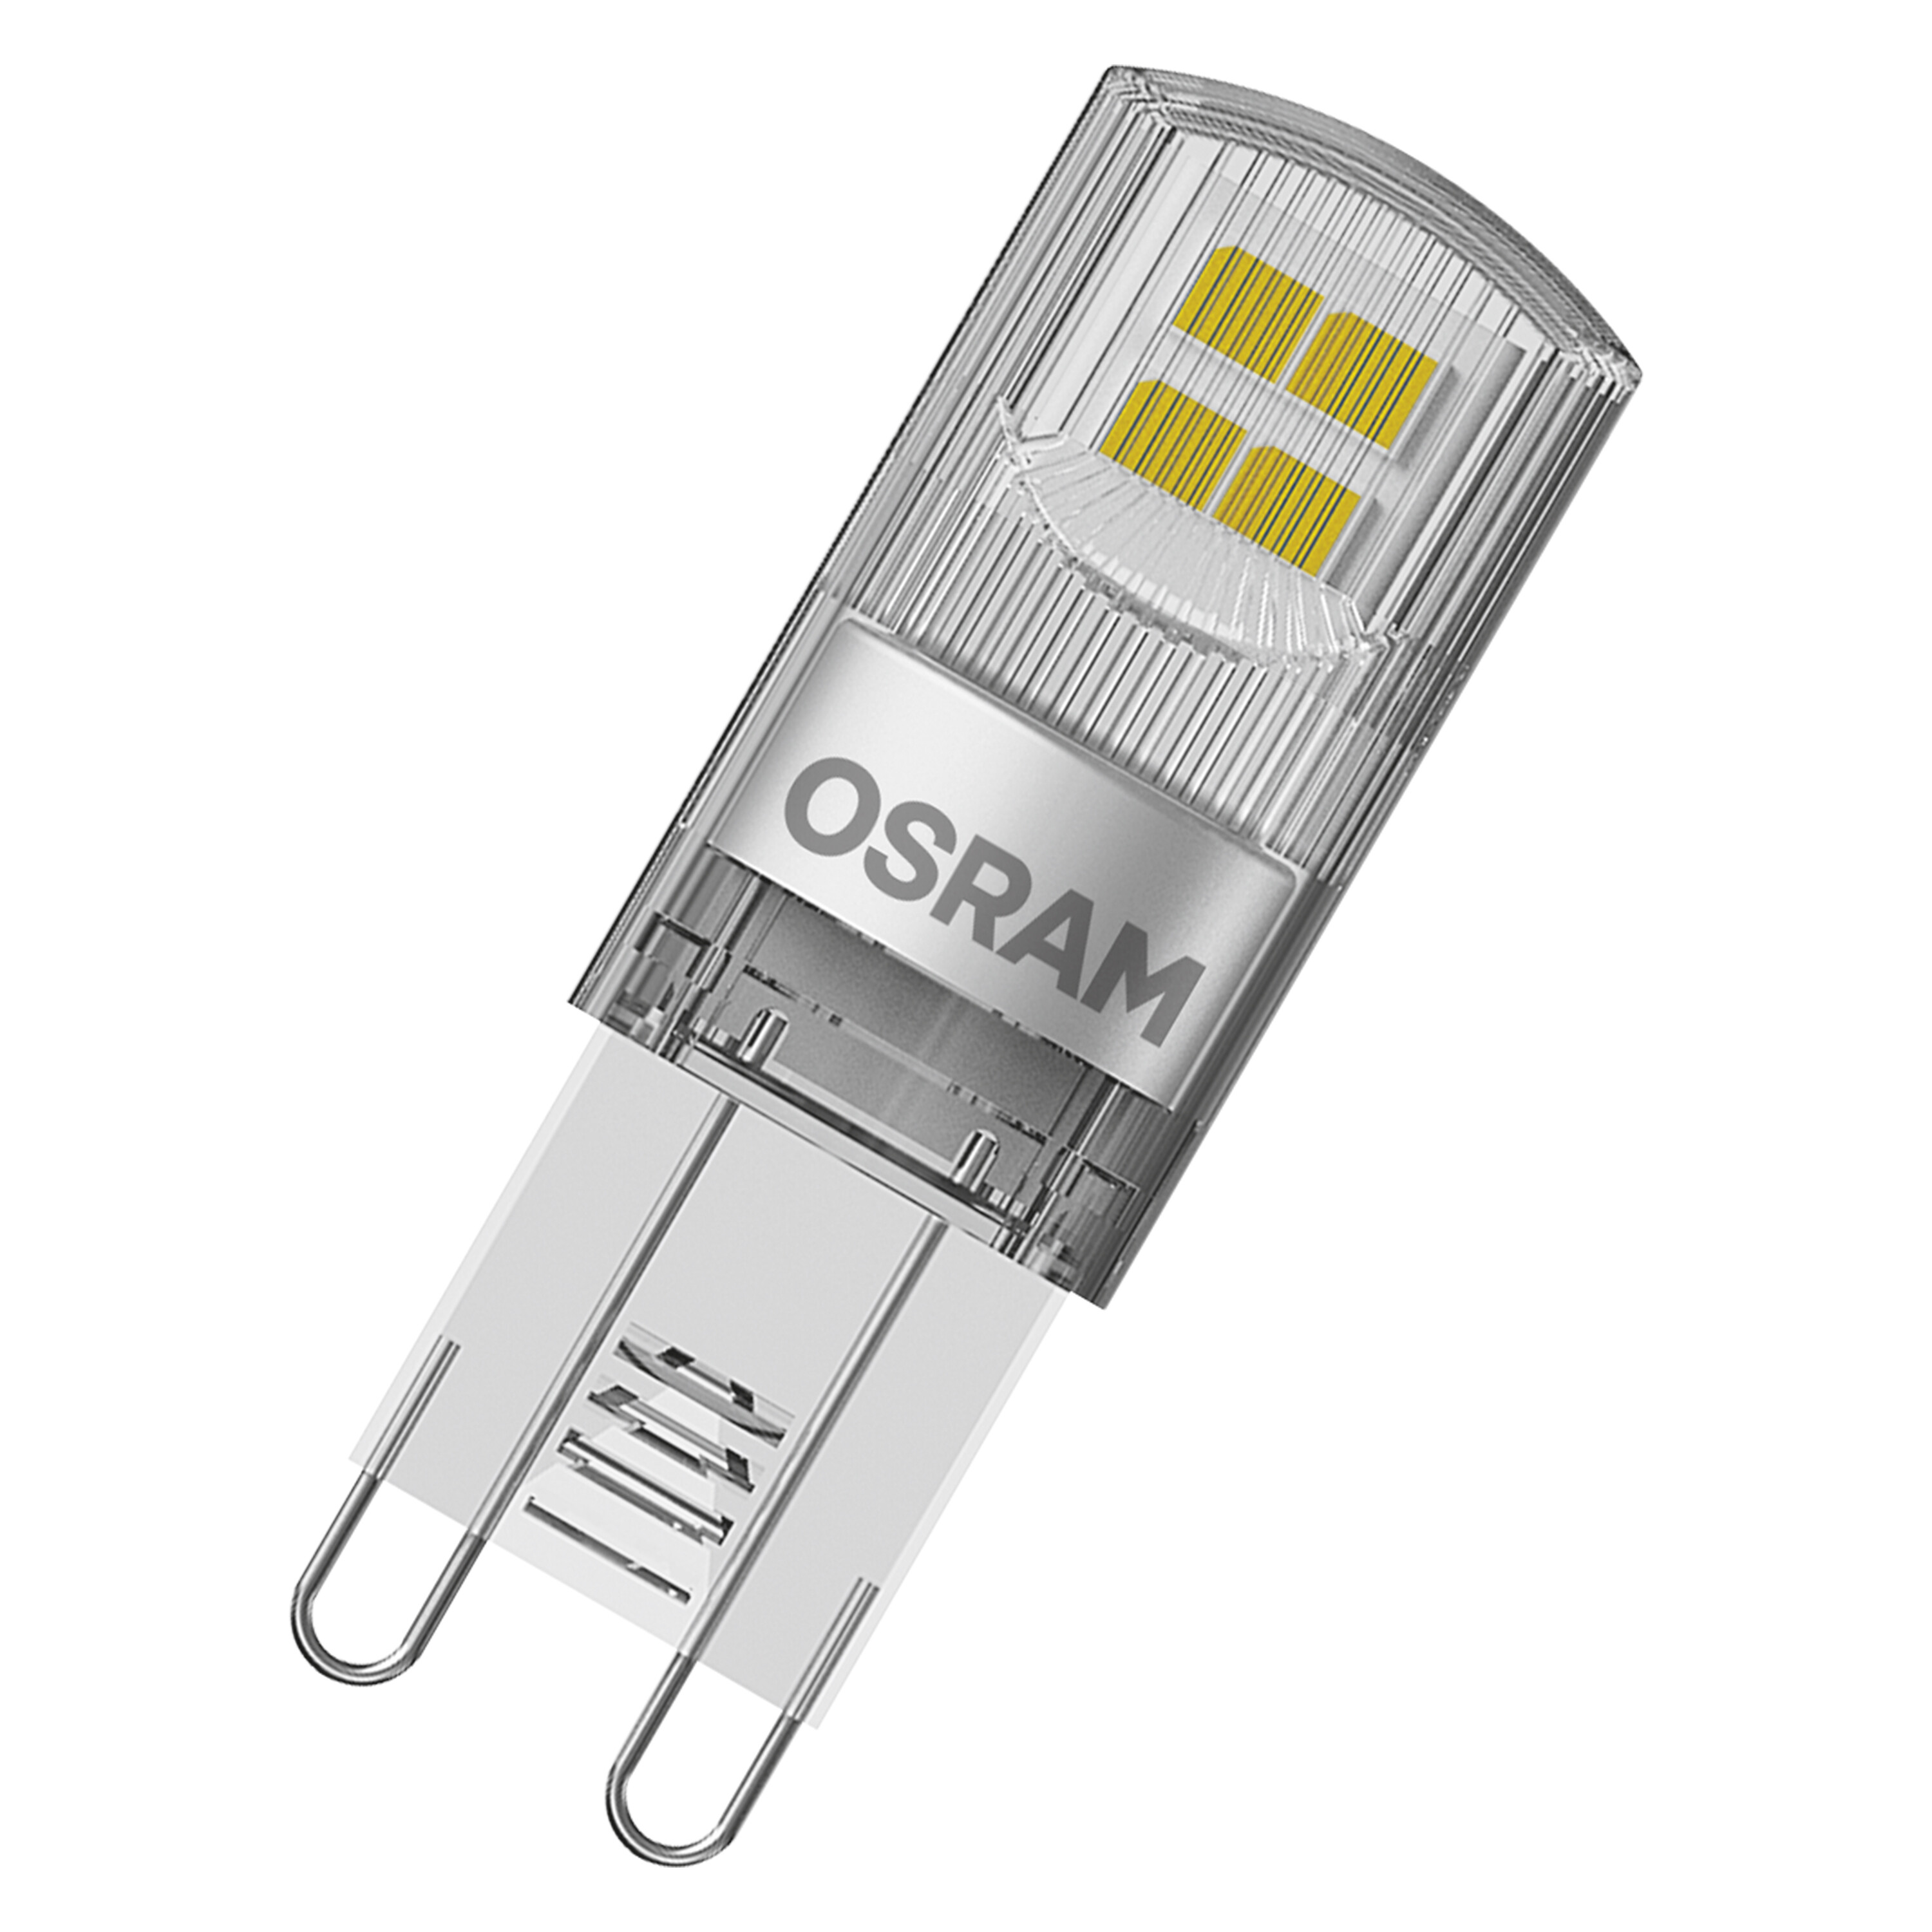 Lampe BASE Lumen G9 LED OSRAM  PIN Warmweiß 200 LED